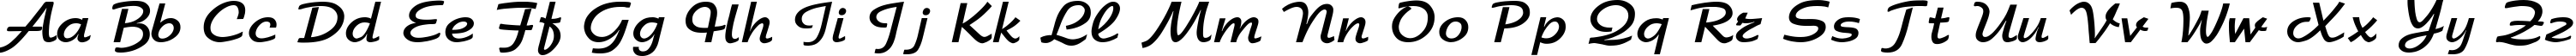 Пример написания английского алфавита шрифтом Arbat-Bold